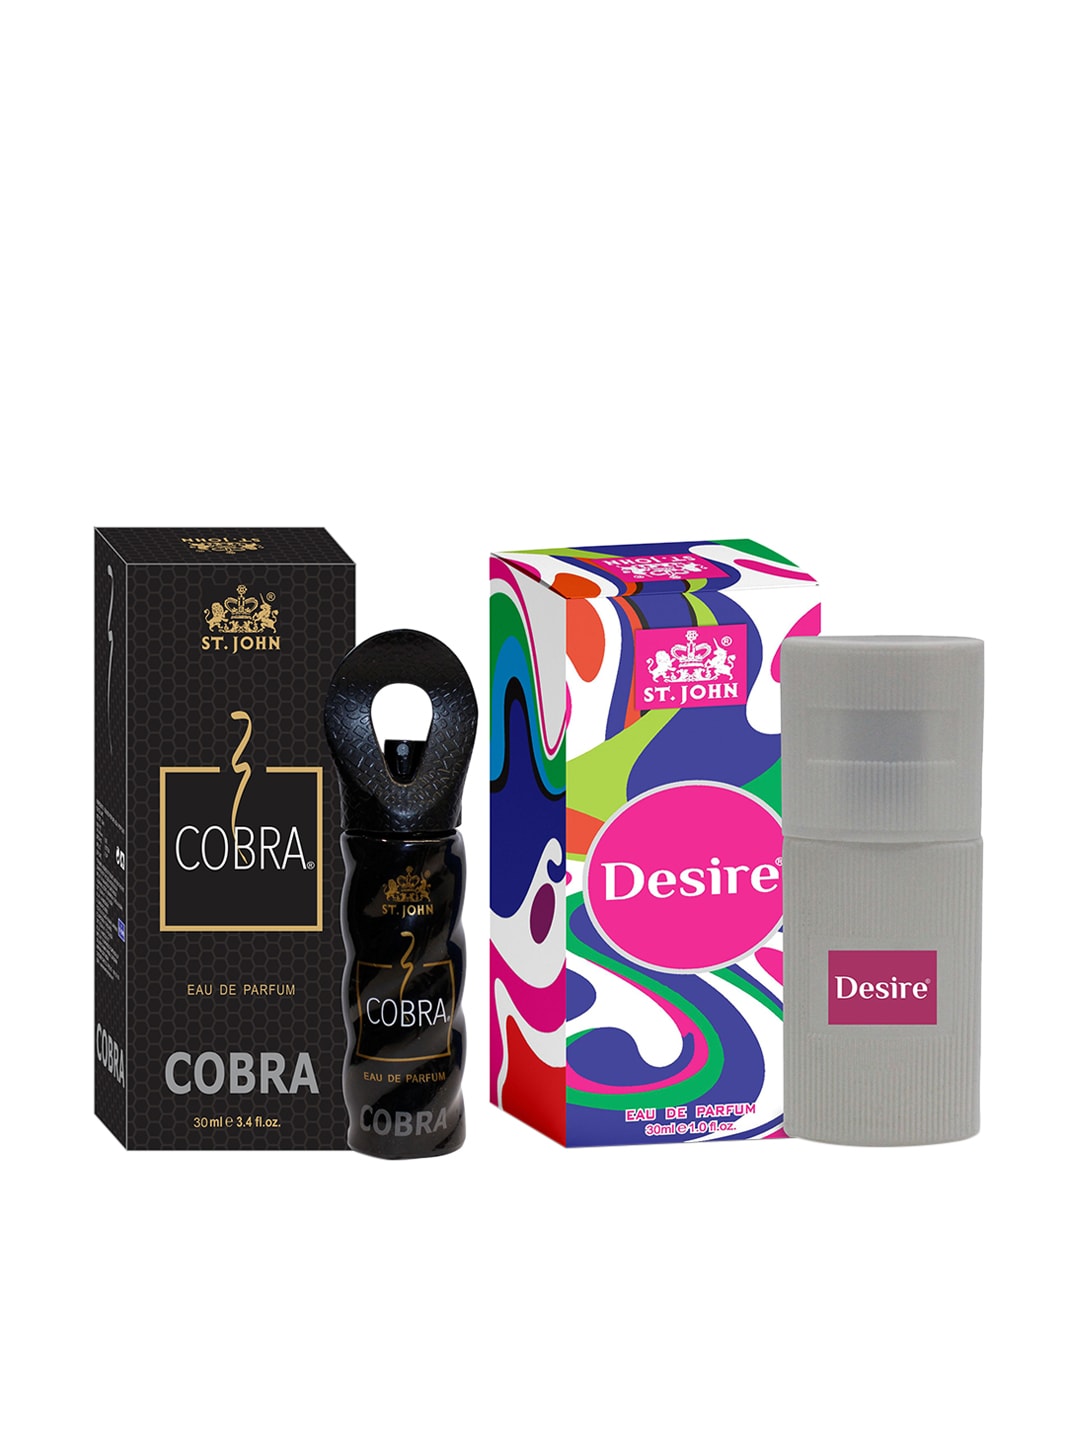 St. John Set of Cobra & Desire Eau De Parfum 30 ml Each Price in India